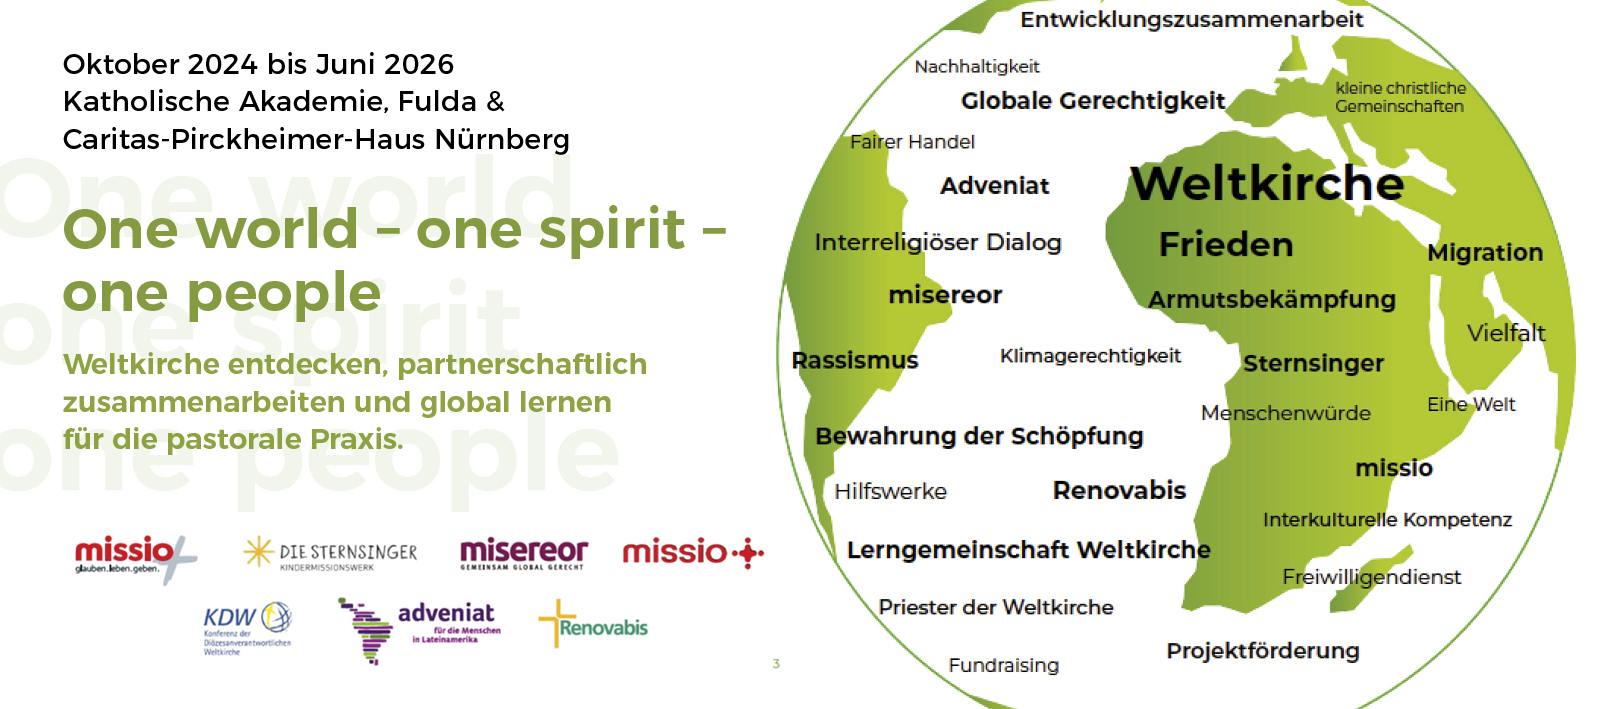 One world - one spirit - one people